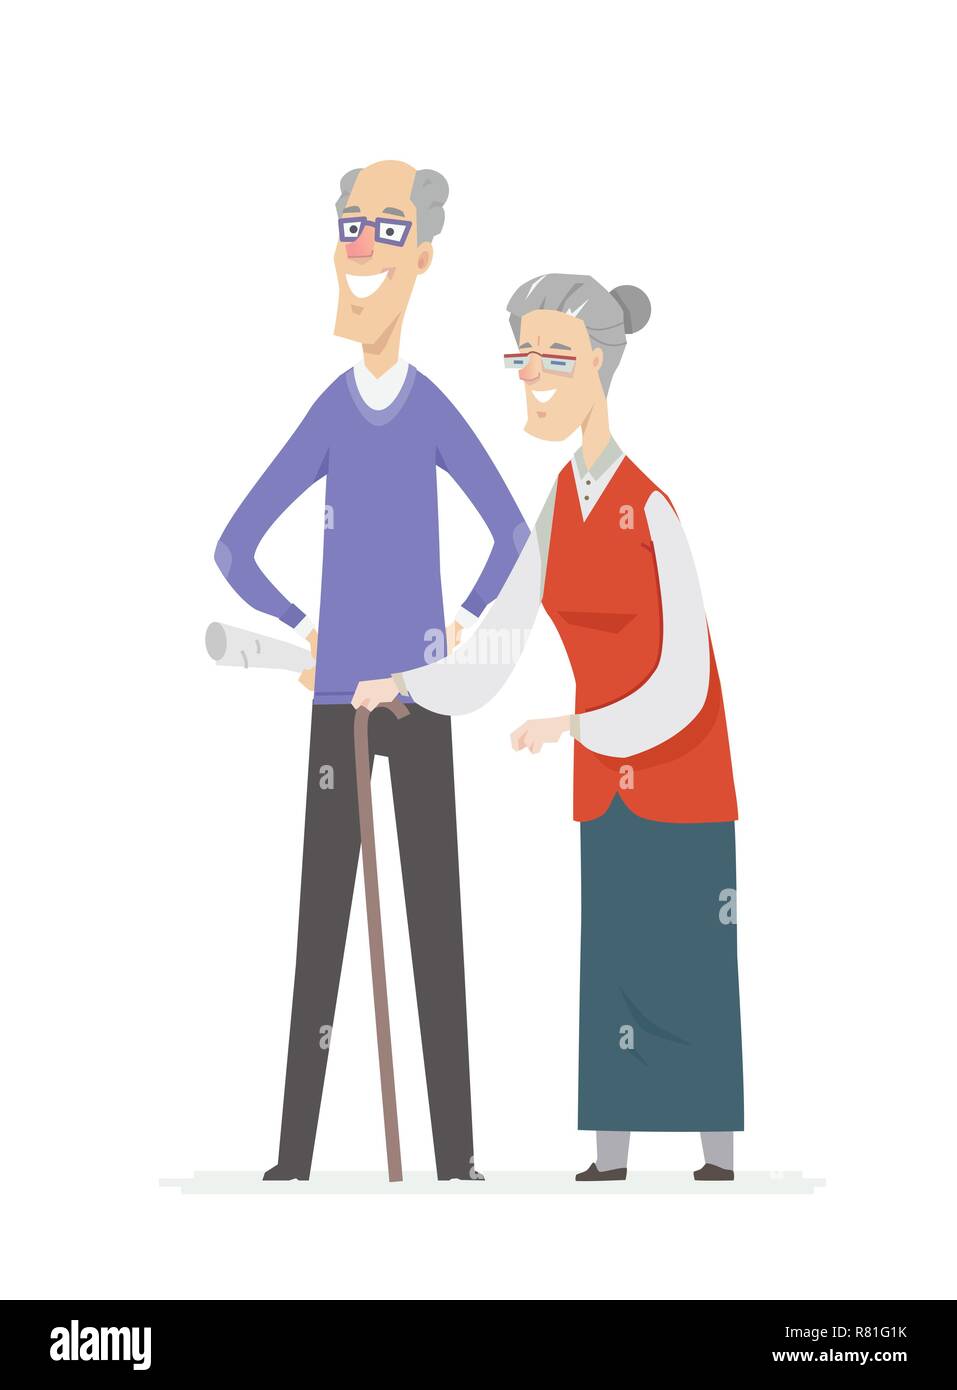 Gerne älteres Paar - cartoon Menschen Zeichen isoliert Abbildung Stock Vektor